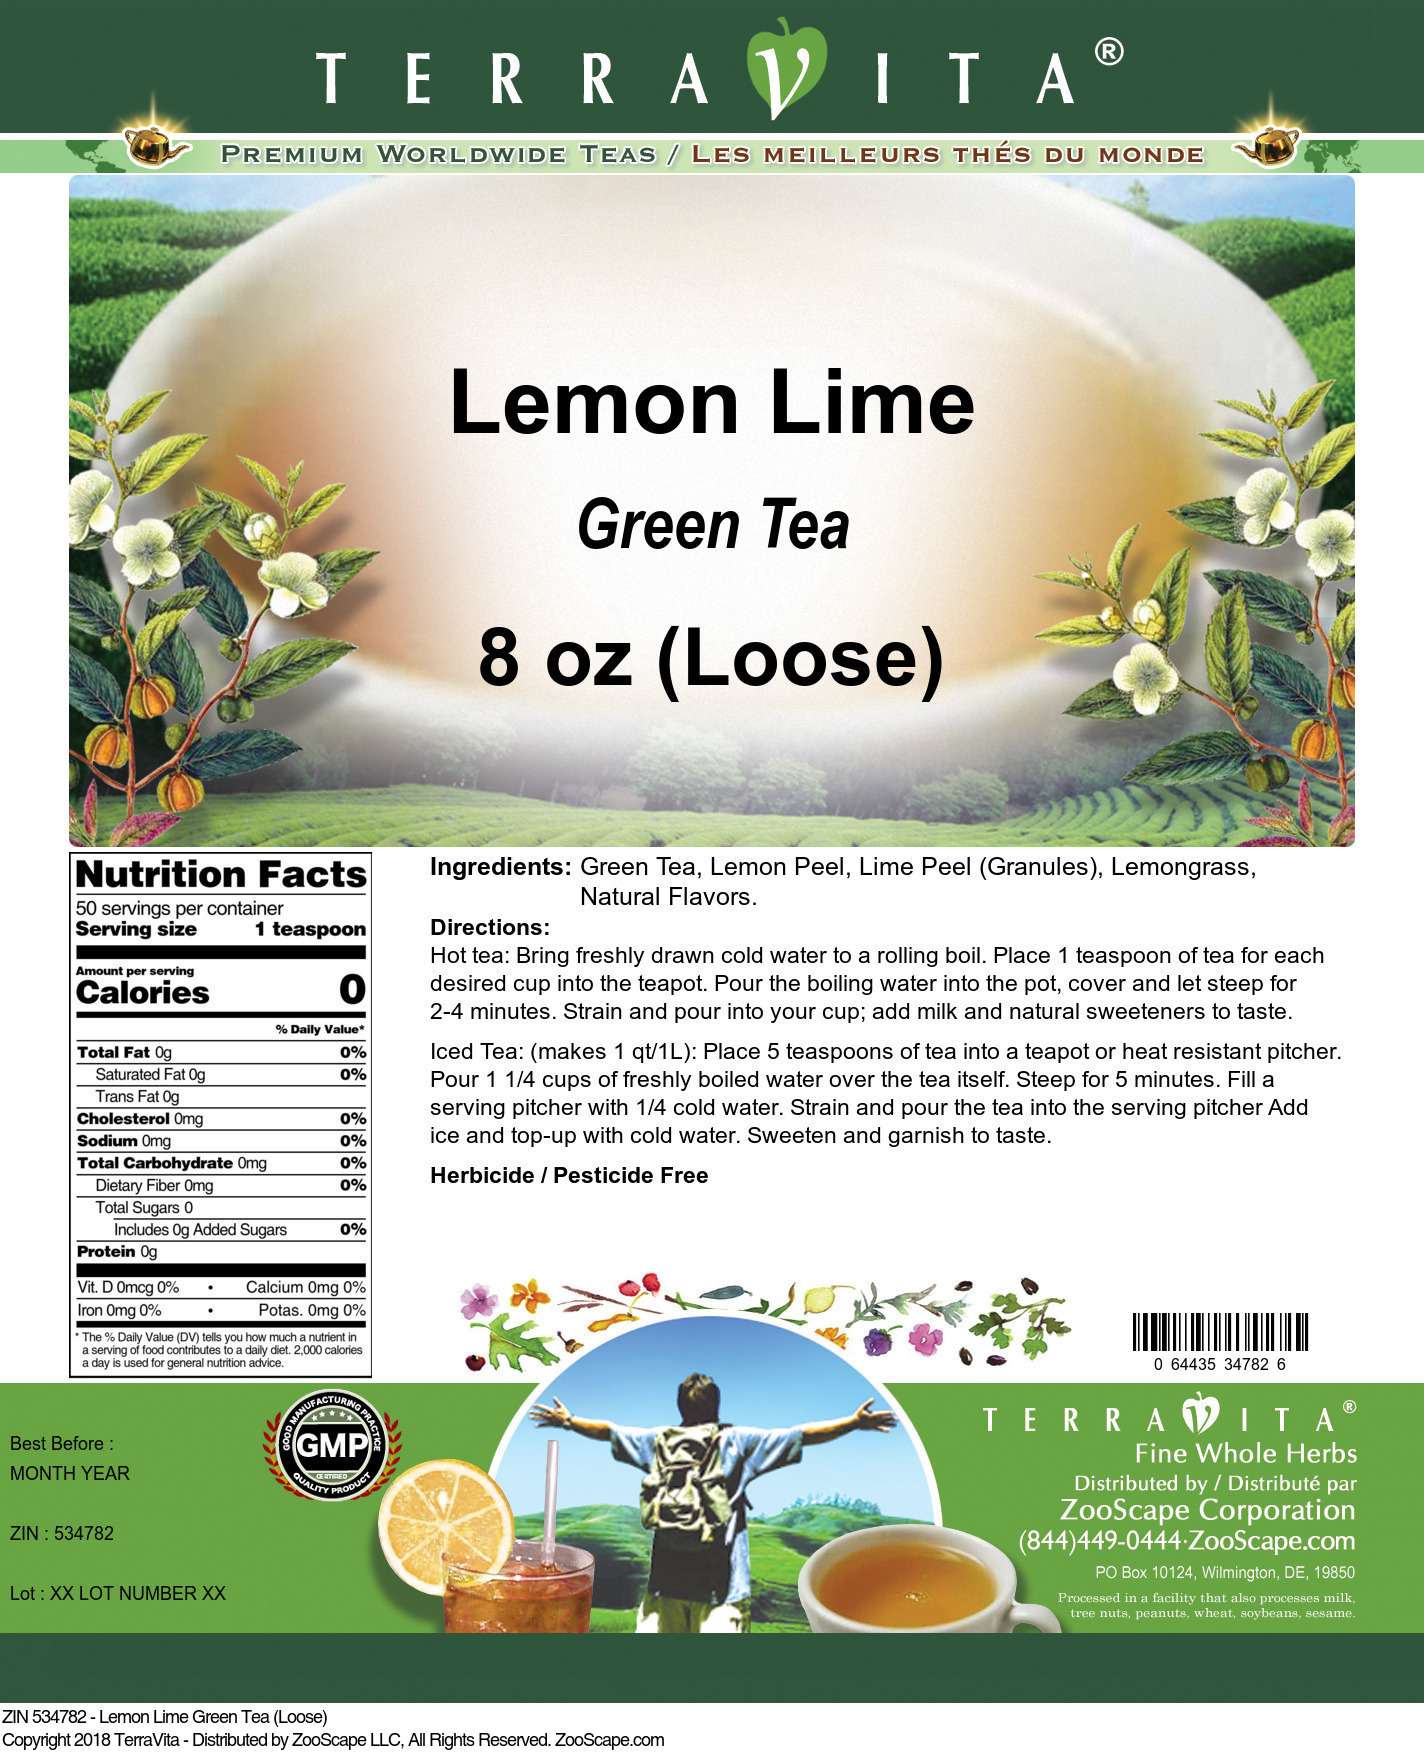 Lemon Lime Green Tea (Loose) - Label